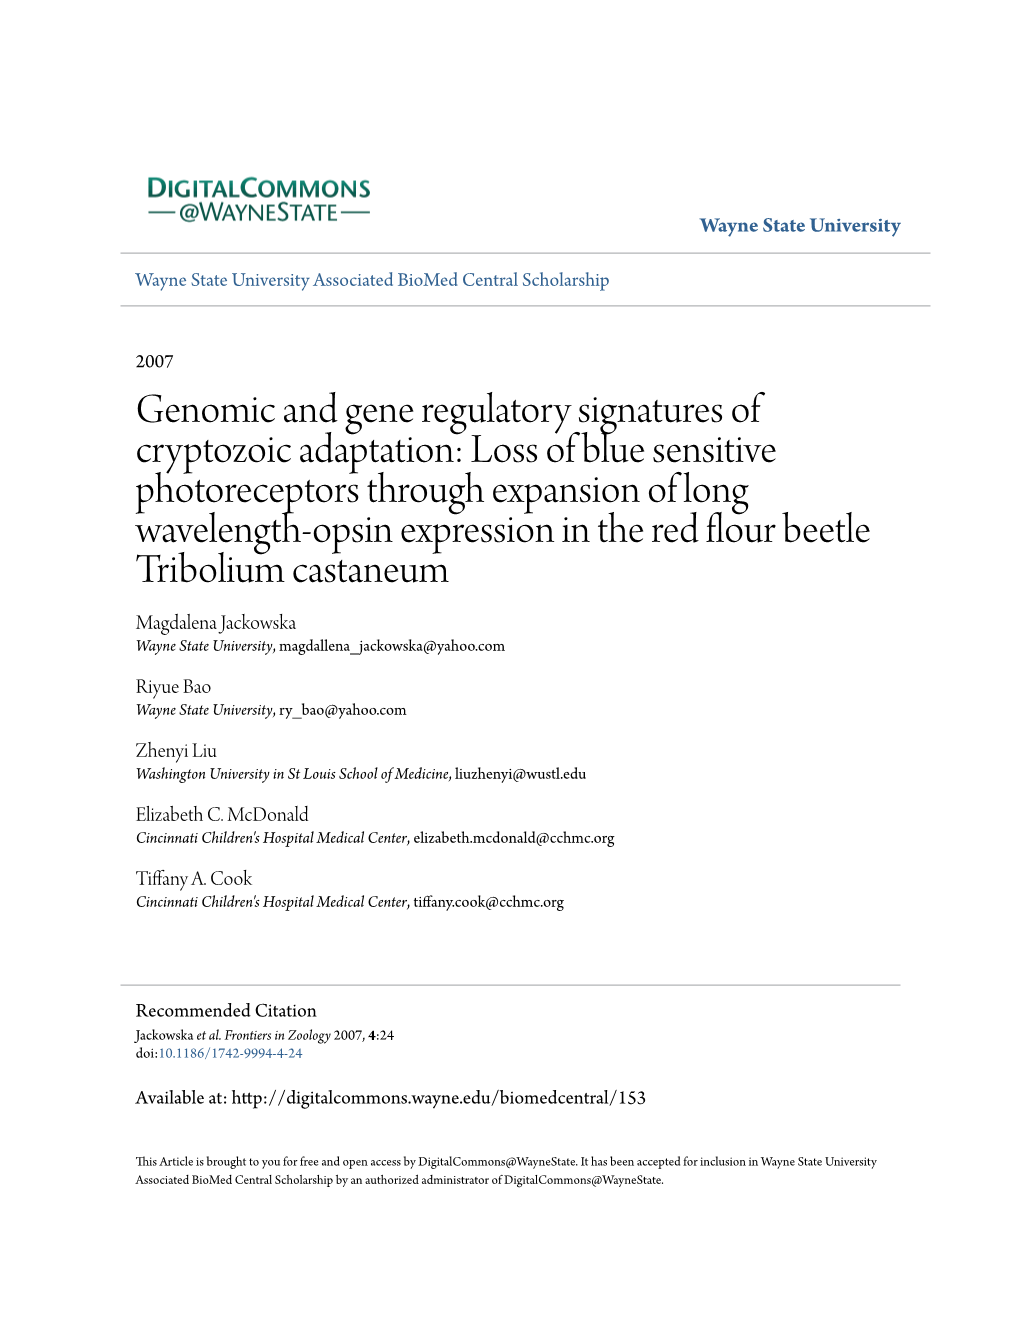 Genomic and Gene Regulatory Signatures of Cryptozoic Adaptation